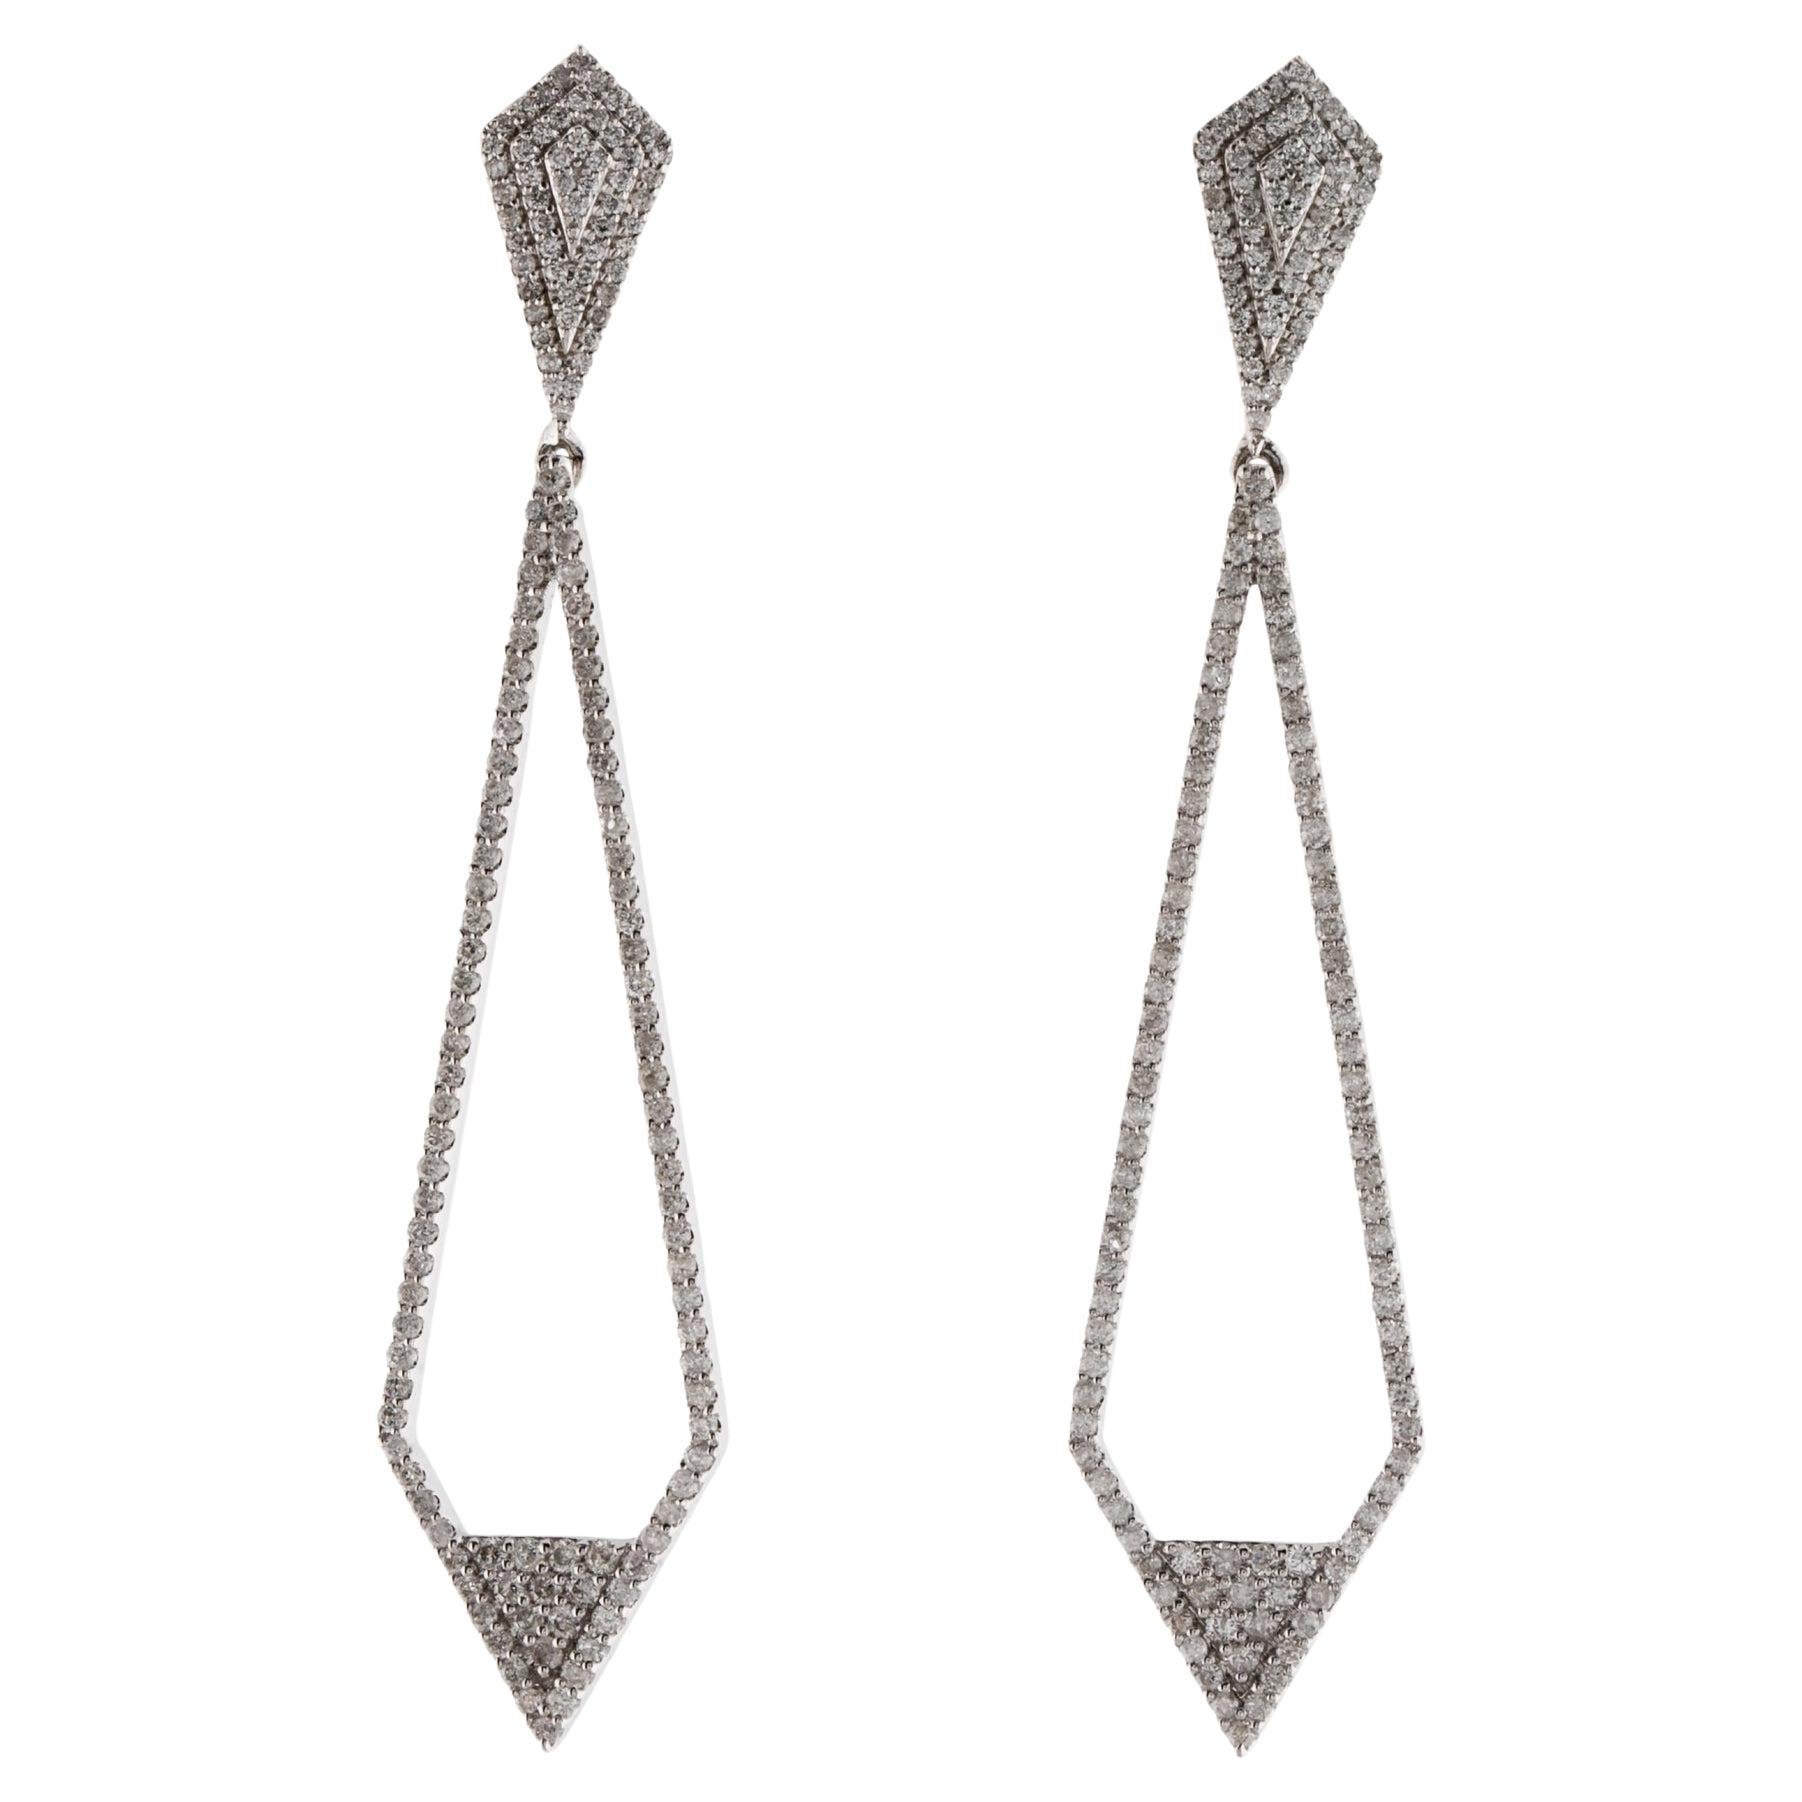 Stunning 14K Diamond Drop Earrings - 1.13ctw Sparkle & Style, Elegant Jewelry